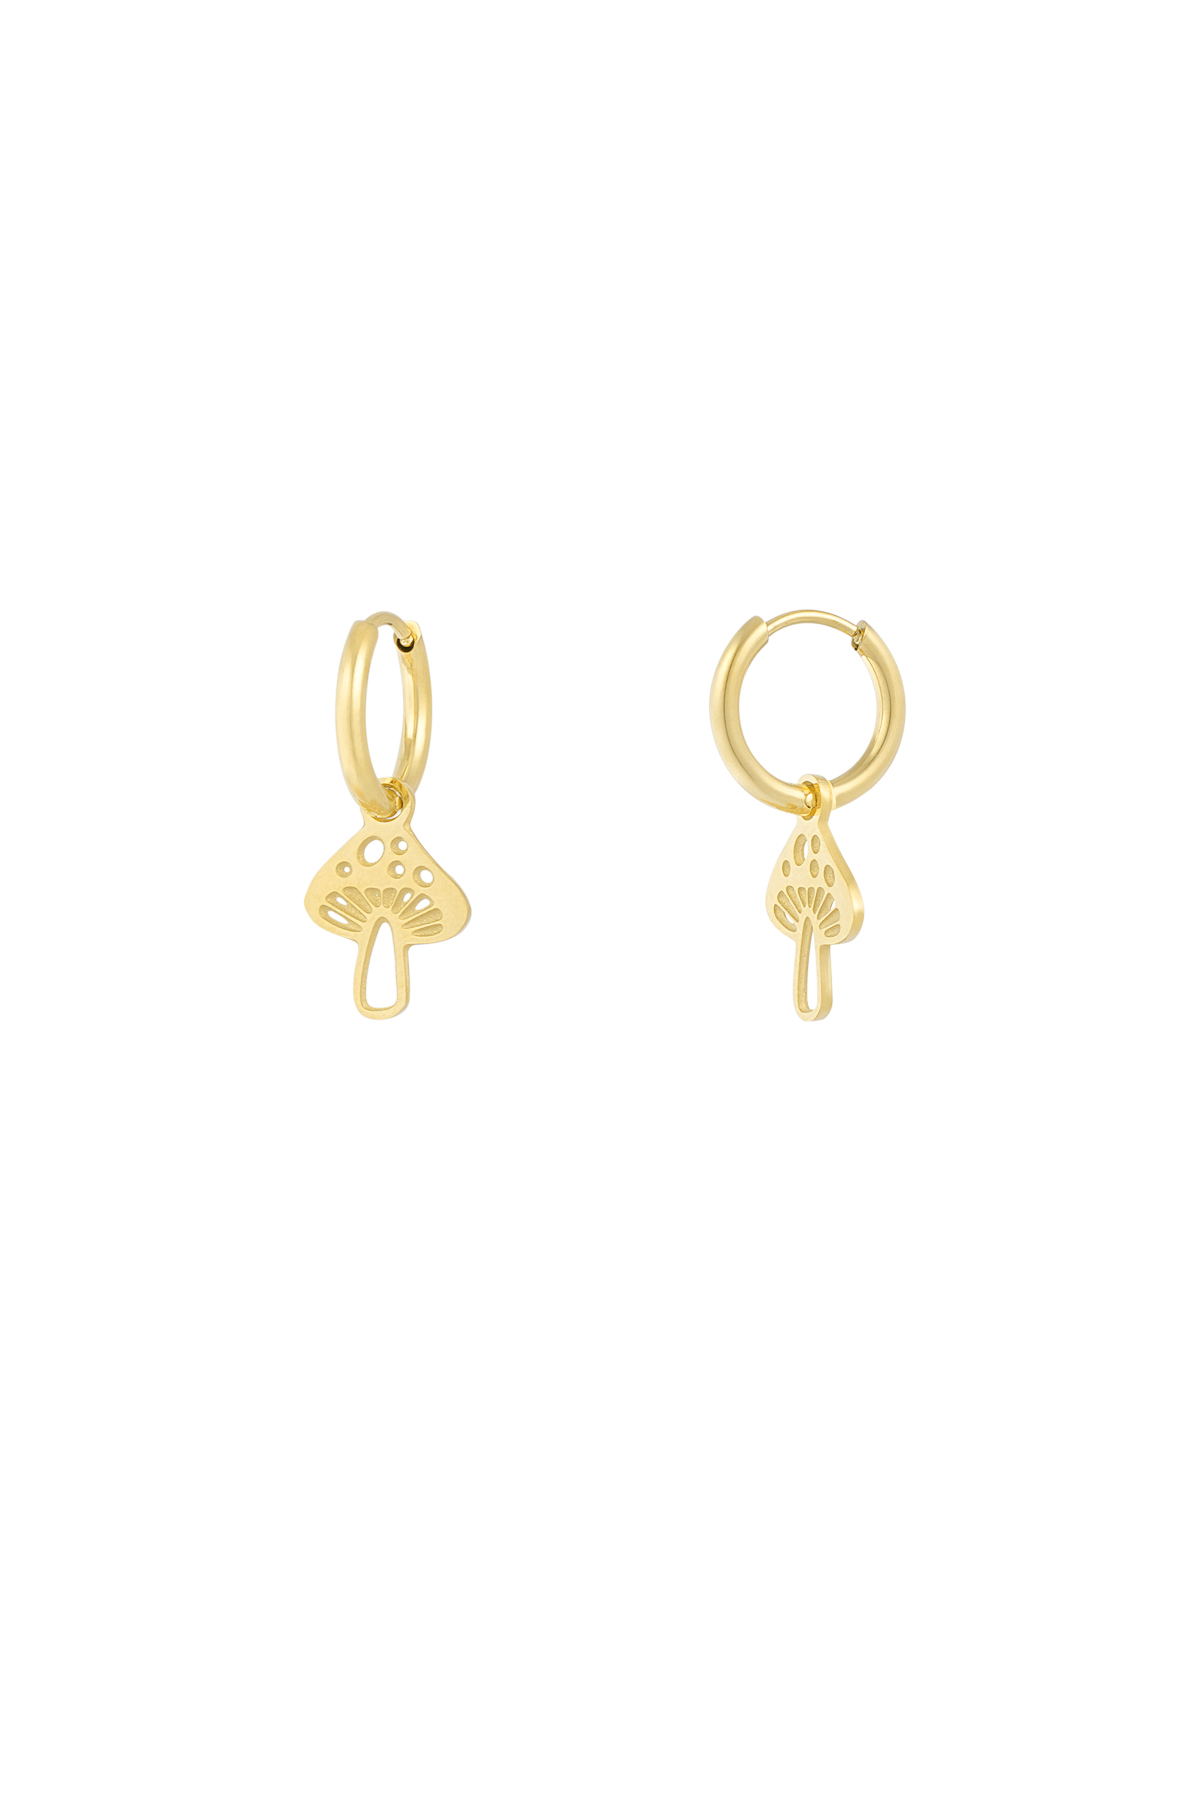 Mushroom earrings - gold 